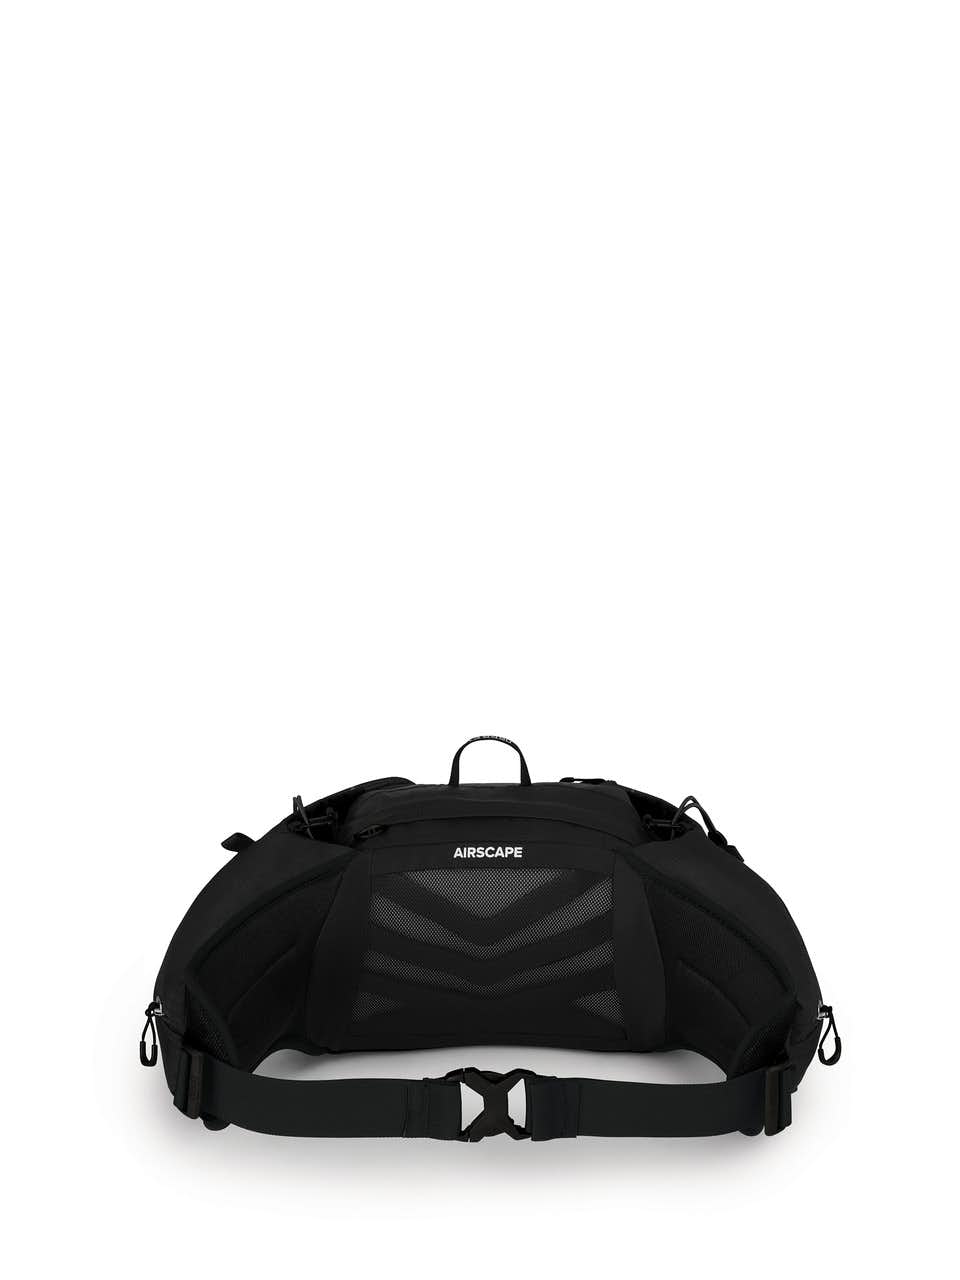 Talon 6 Backpack Stealth Black